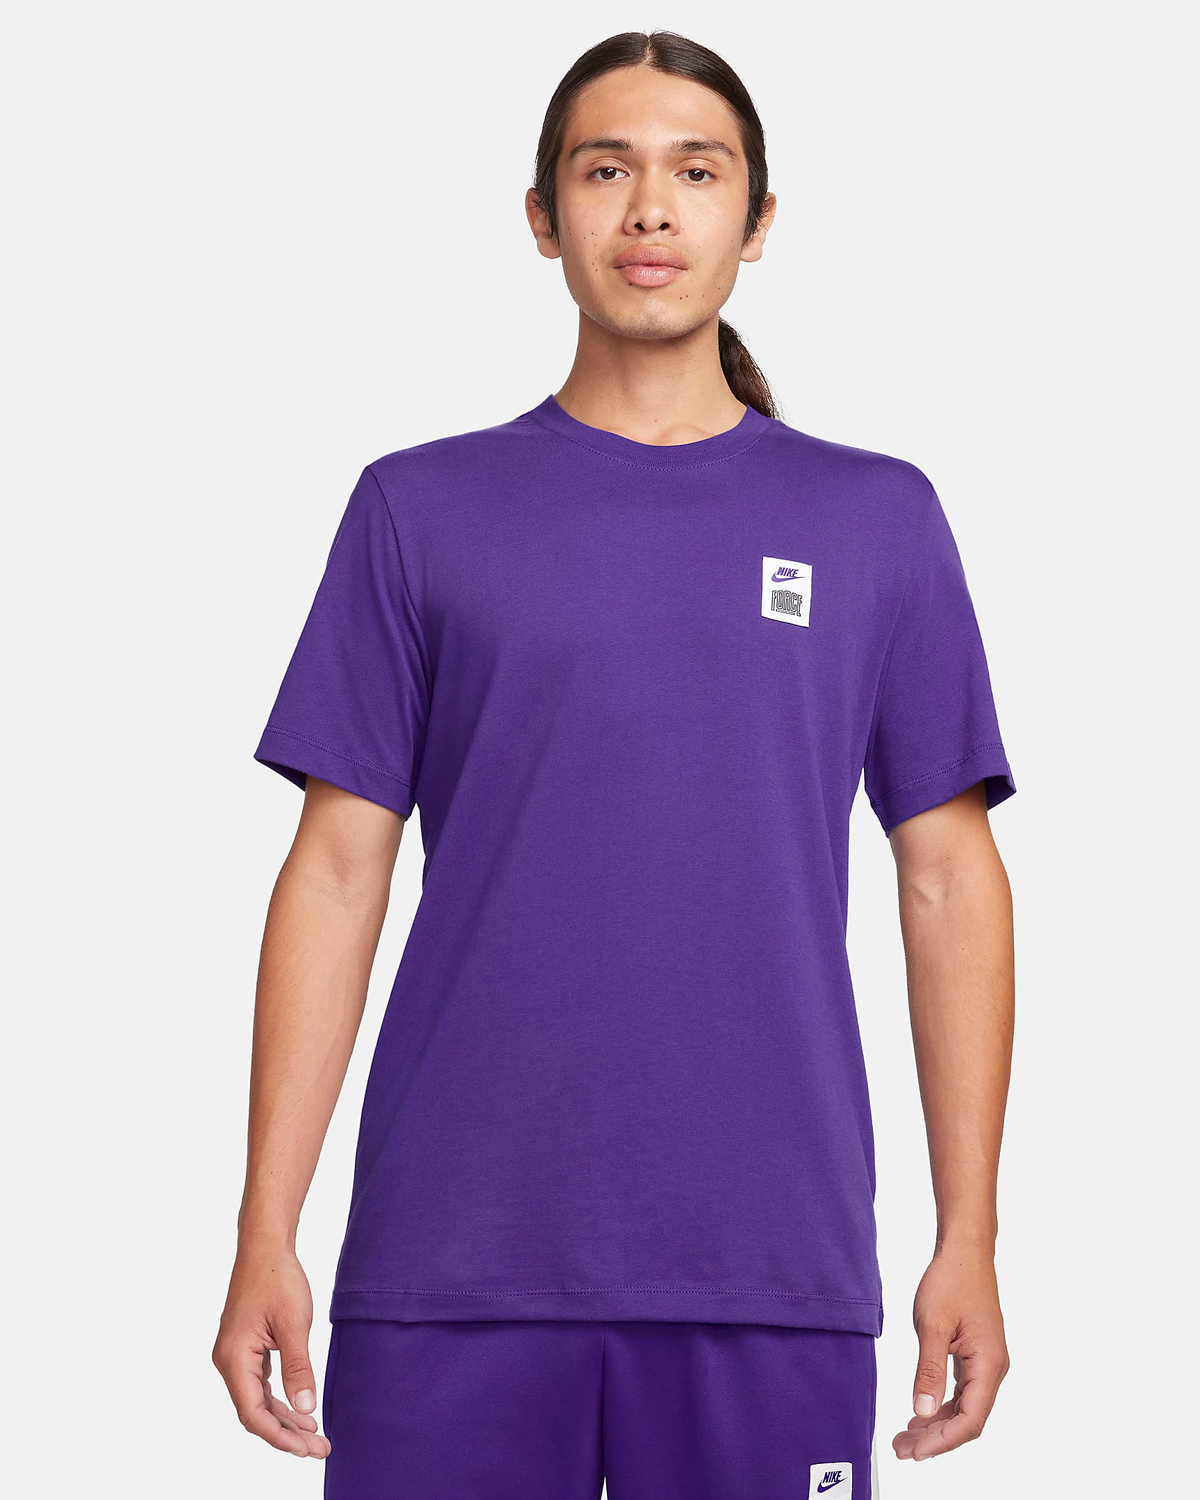 Nike Starting 5 T Shirt Field Purple 1